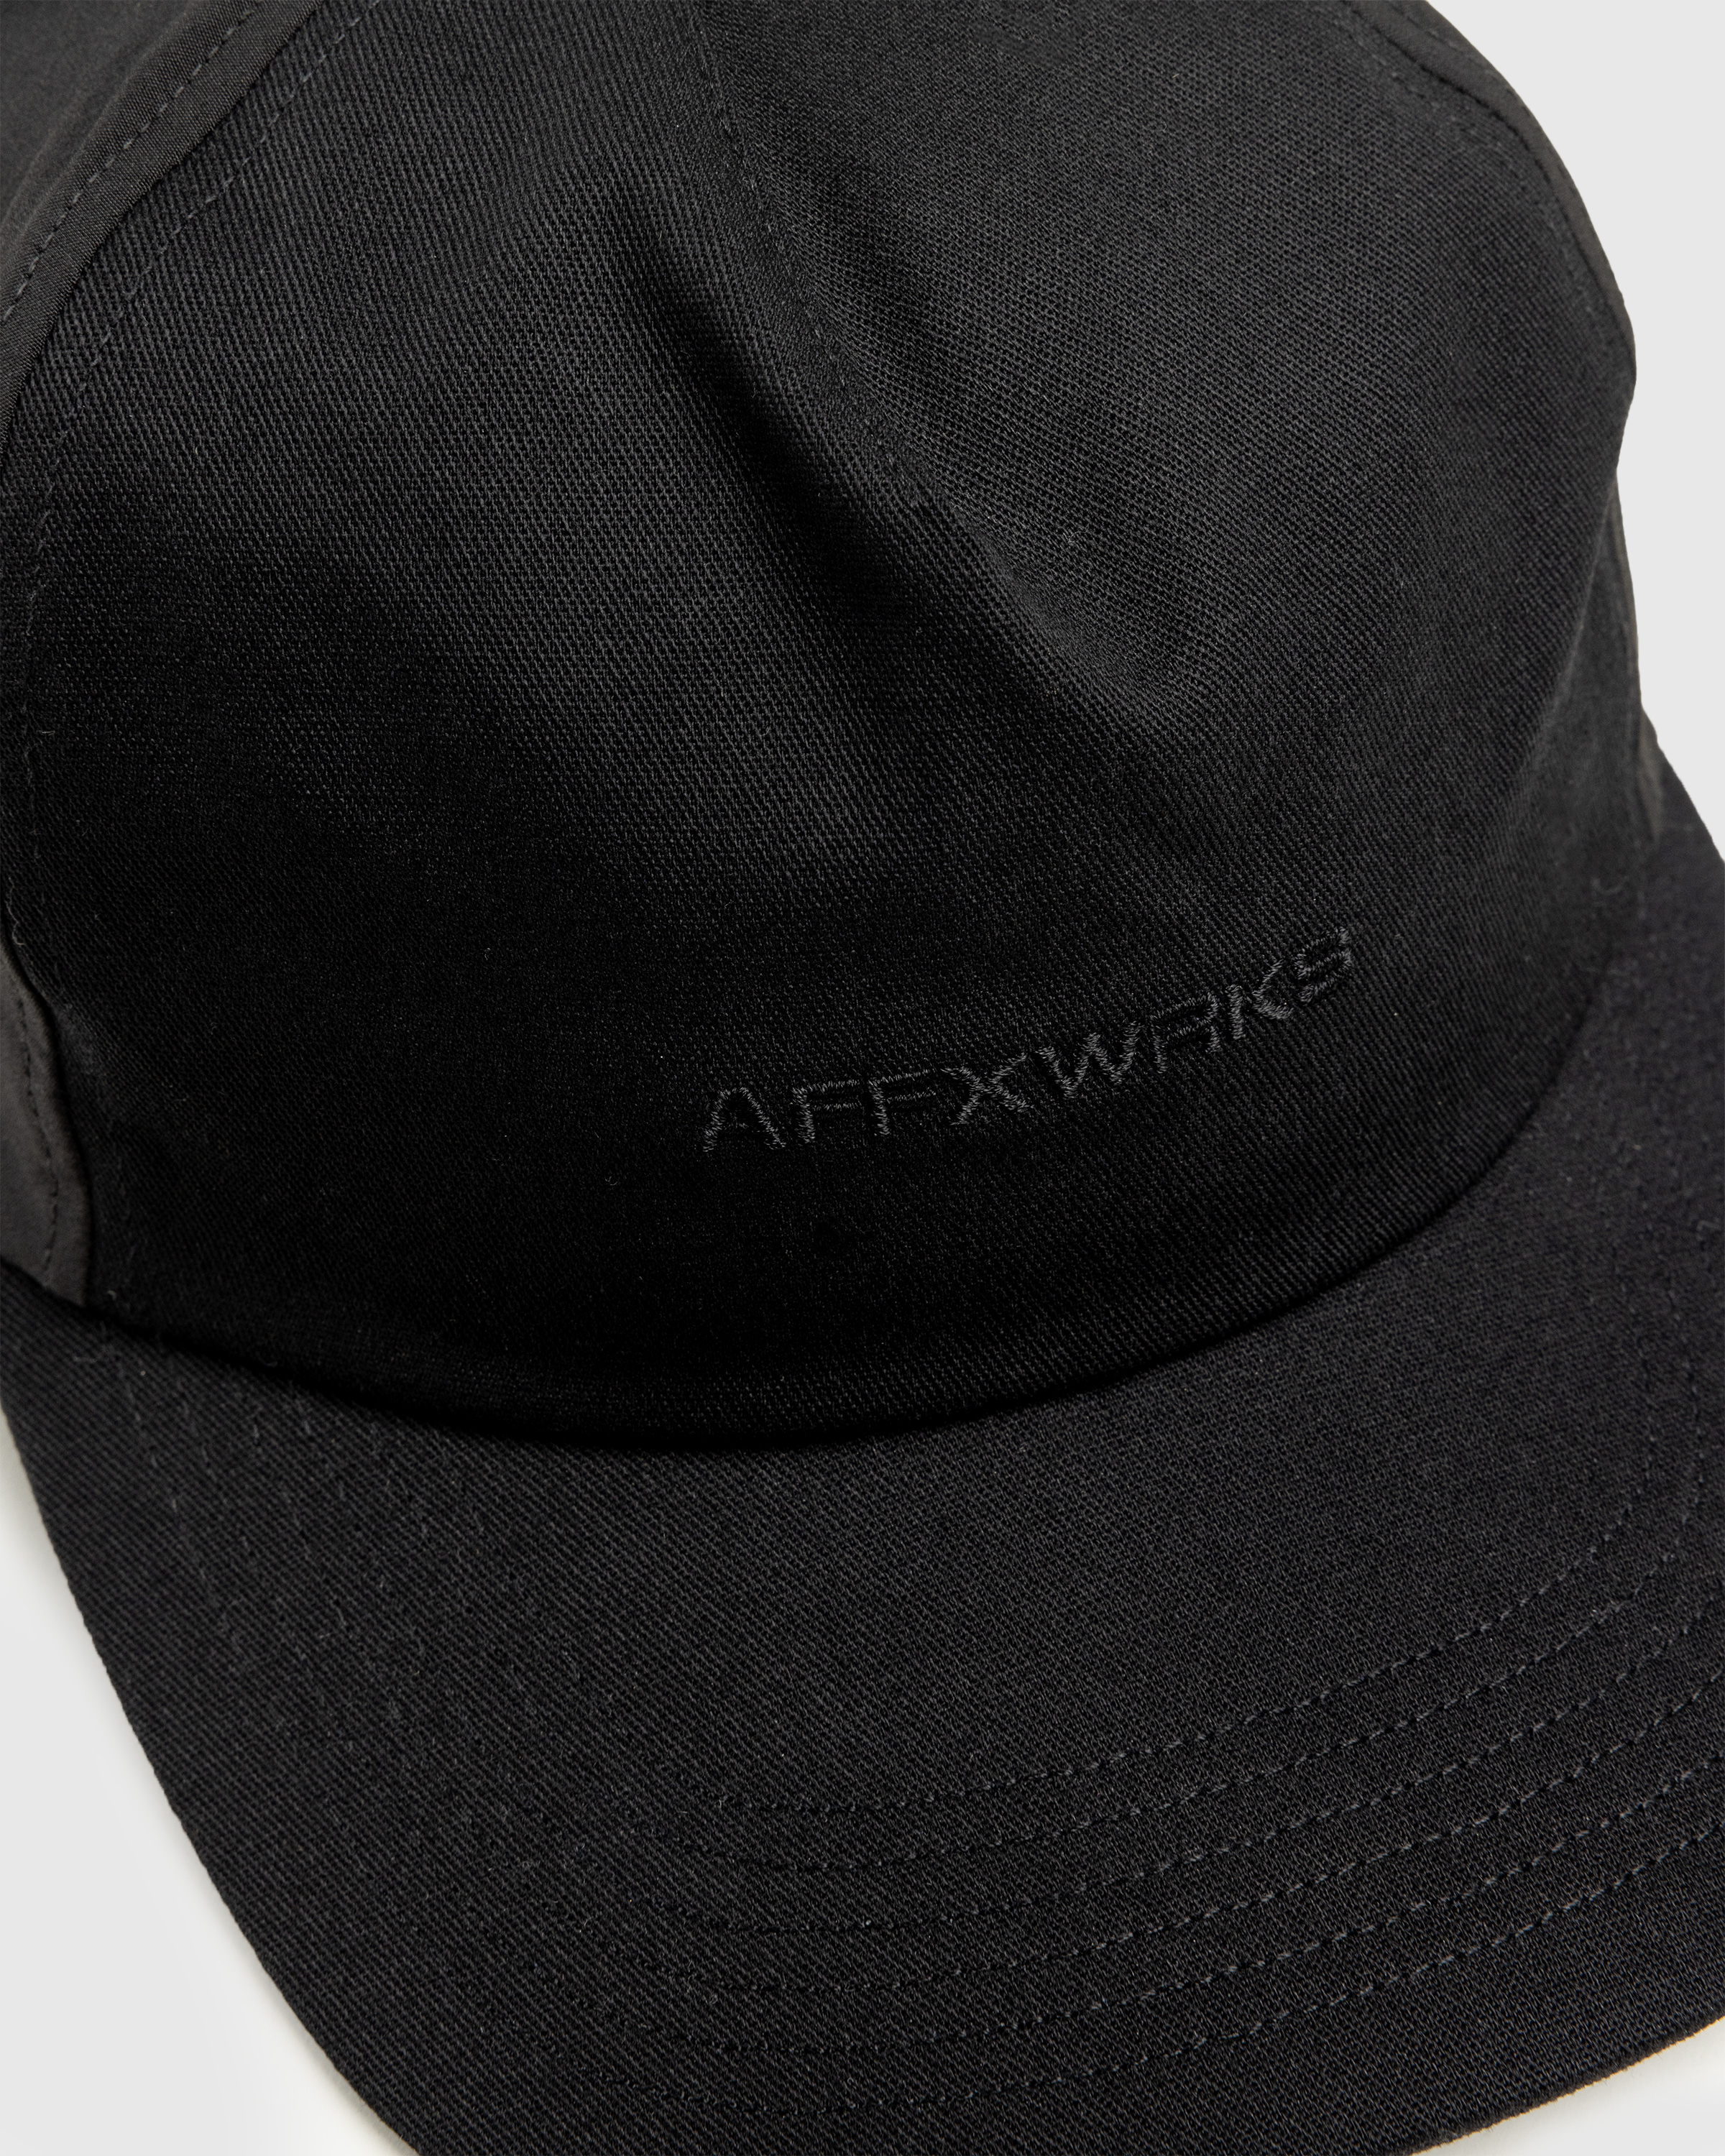 AFFXWRKS – Trucker Cap Black - Caps - Black - Image 5